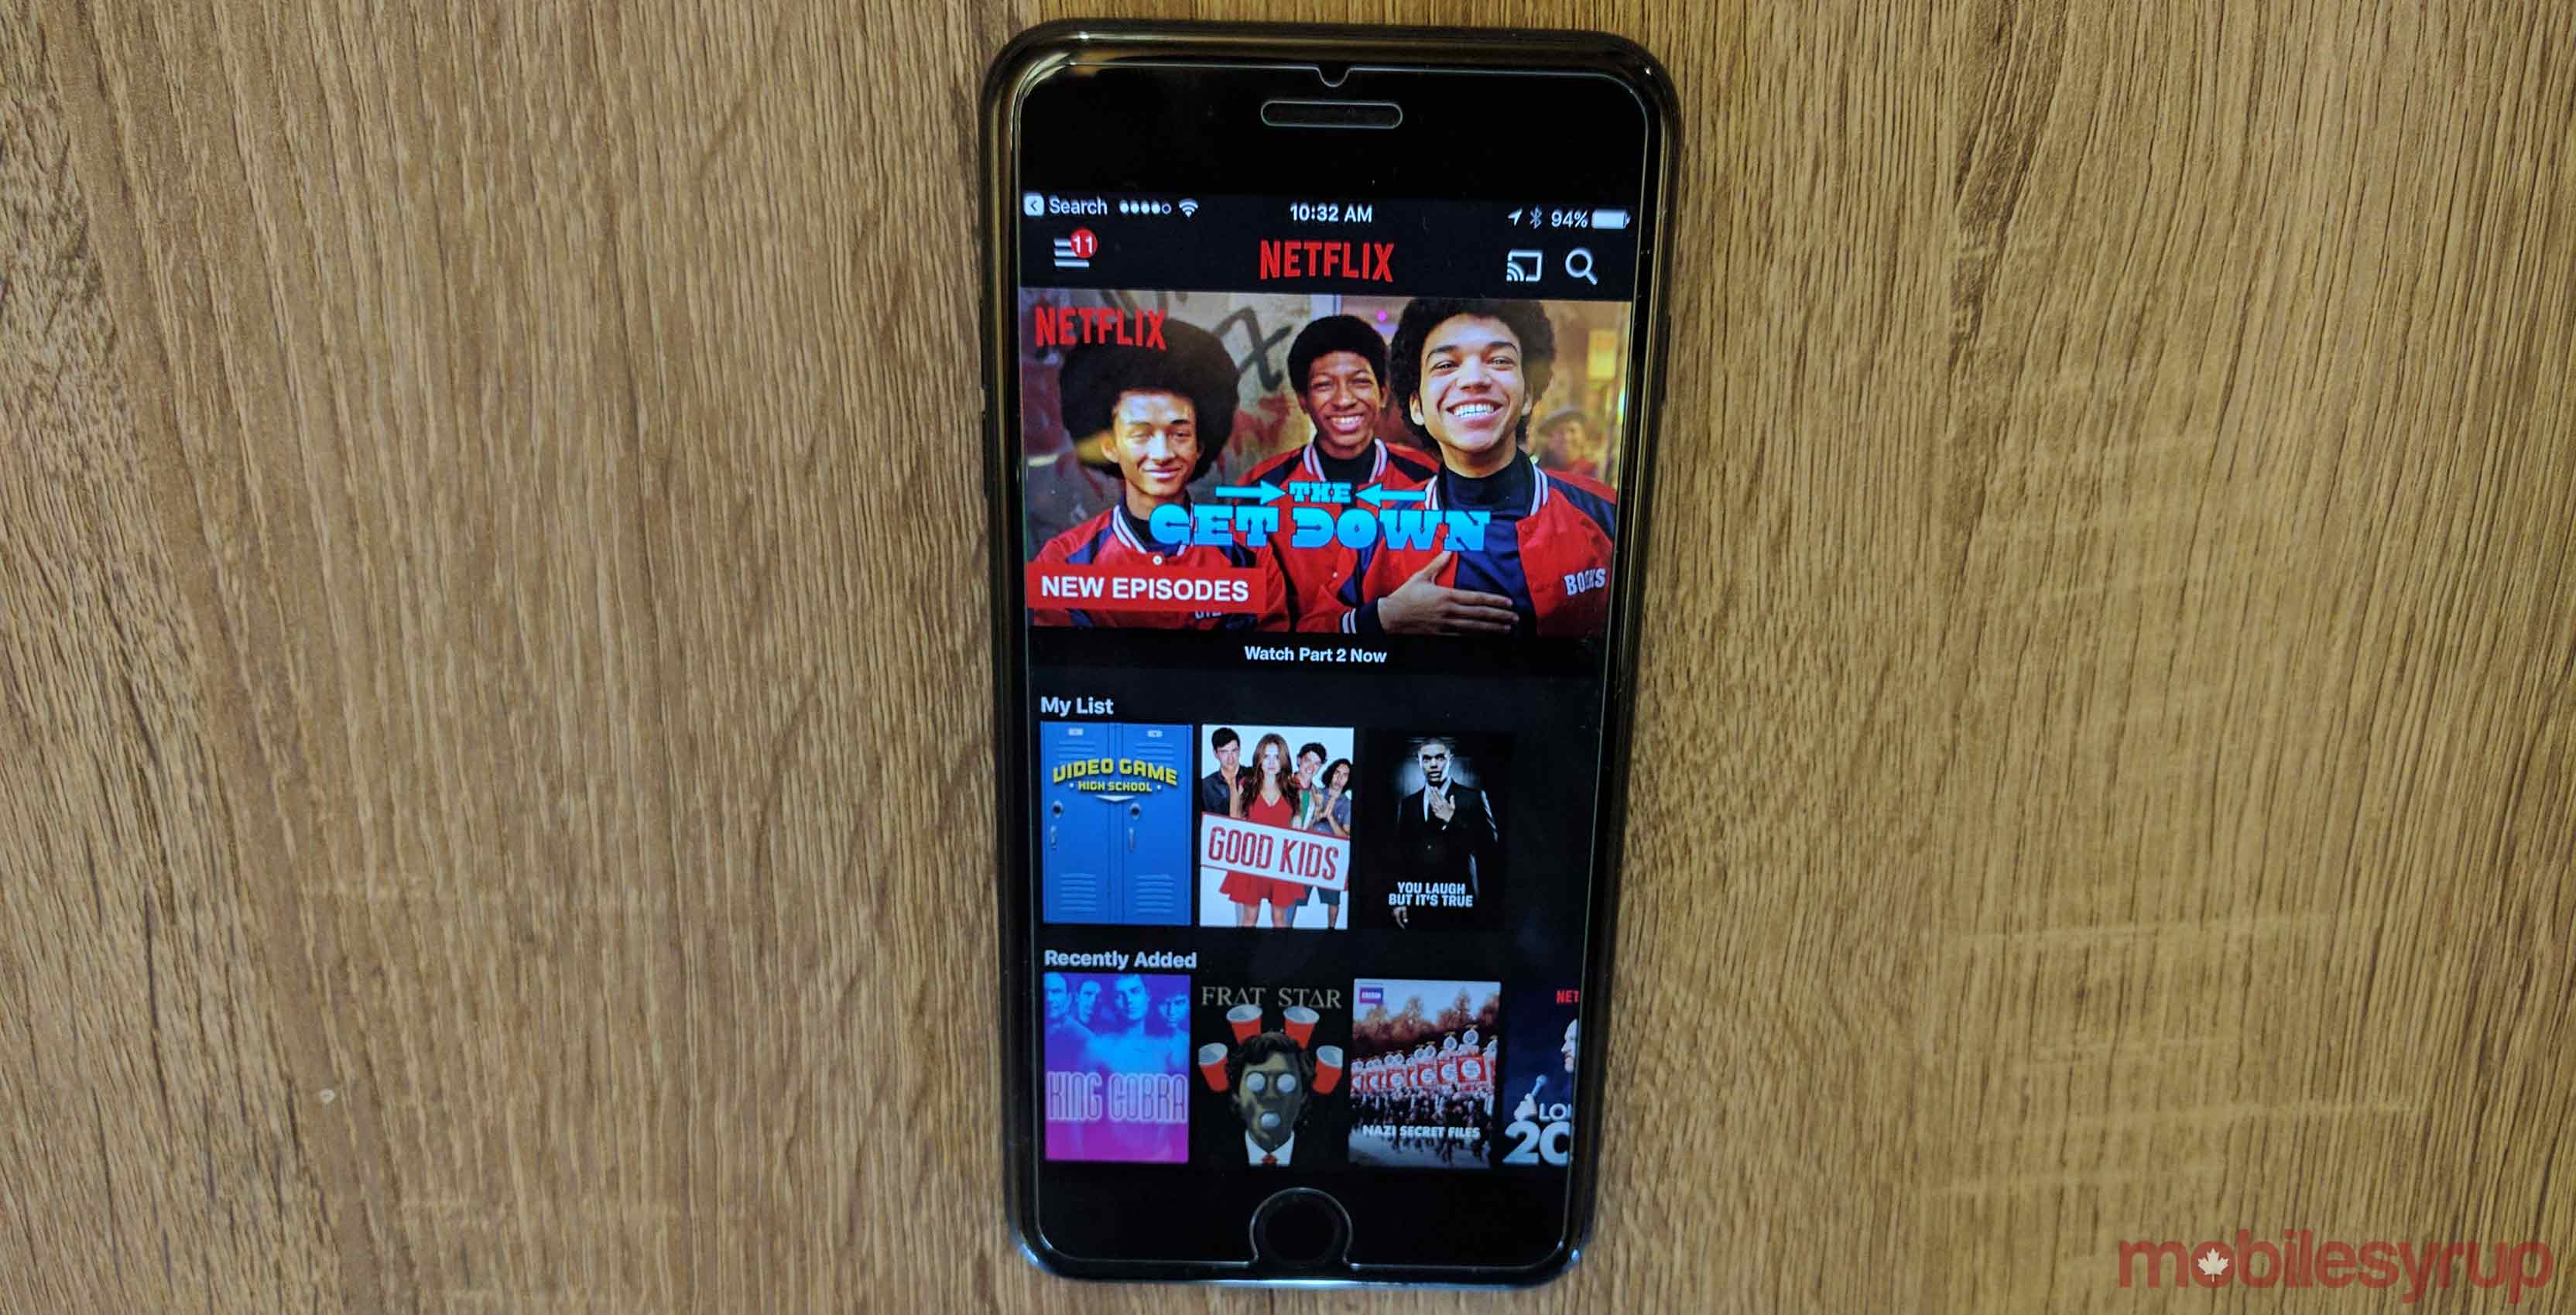 Netflix app opened on an iPhone 7